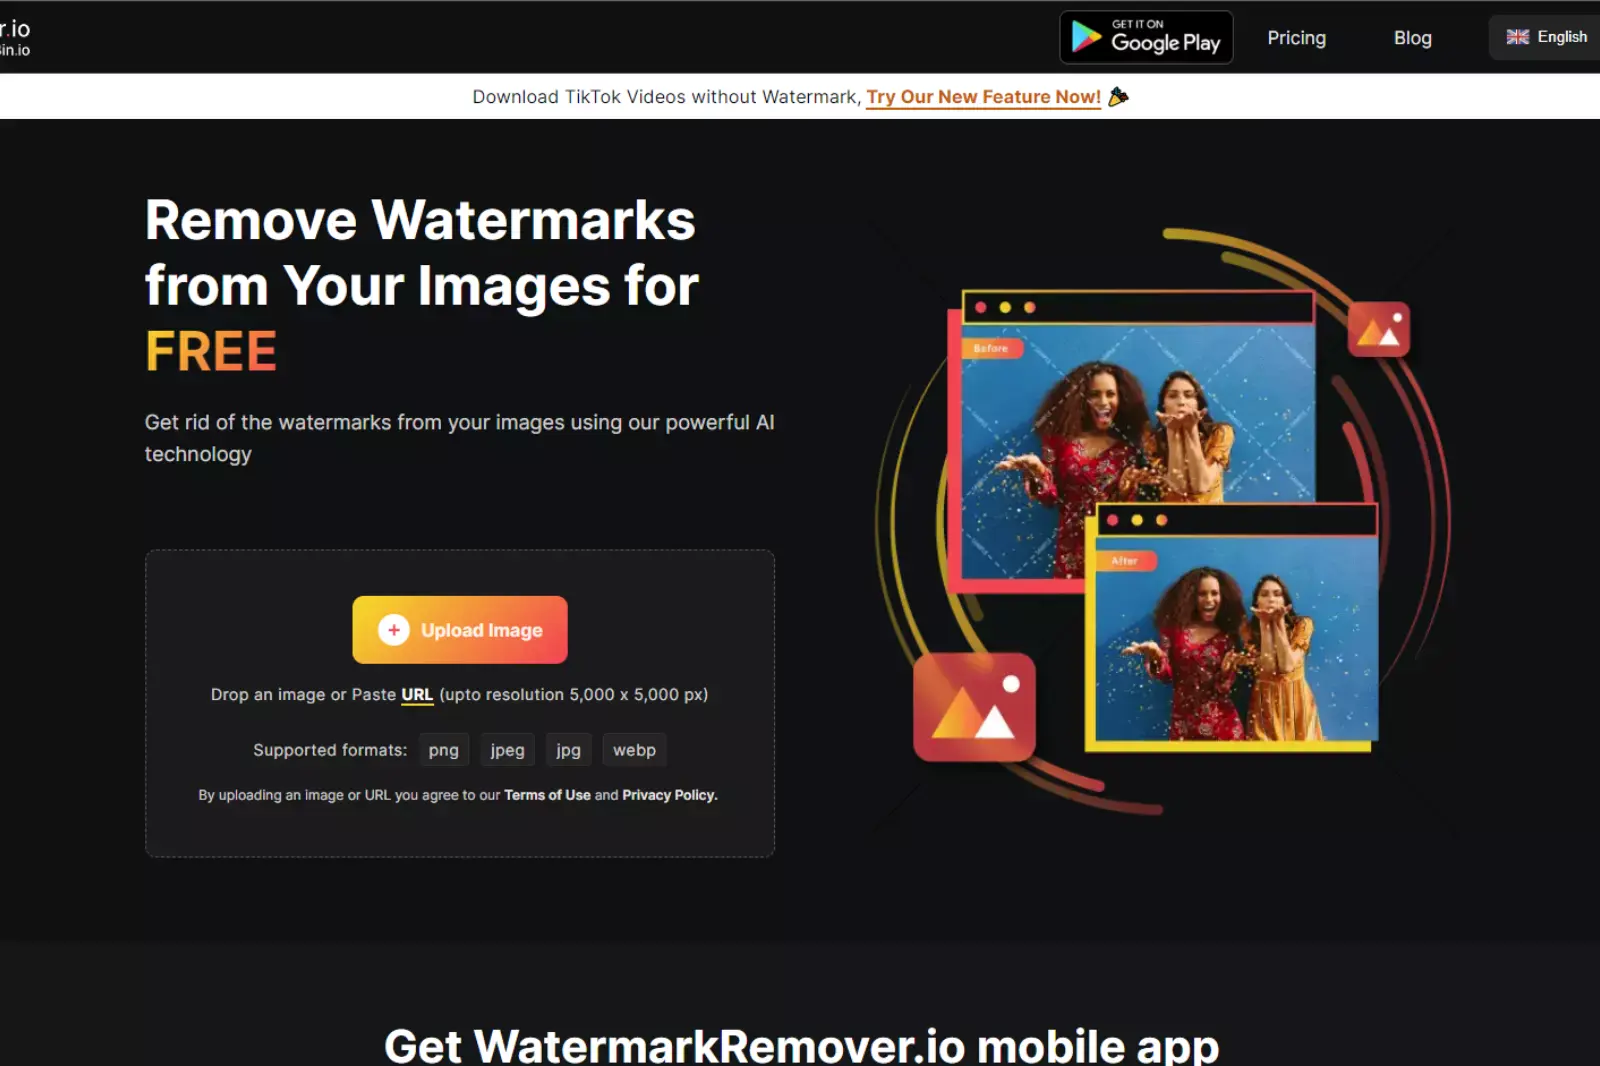 Visit Watermarkremover.io